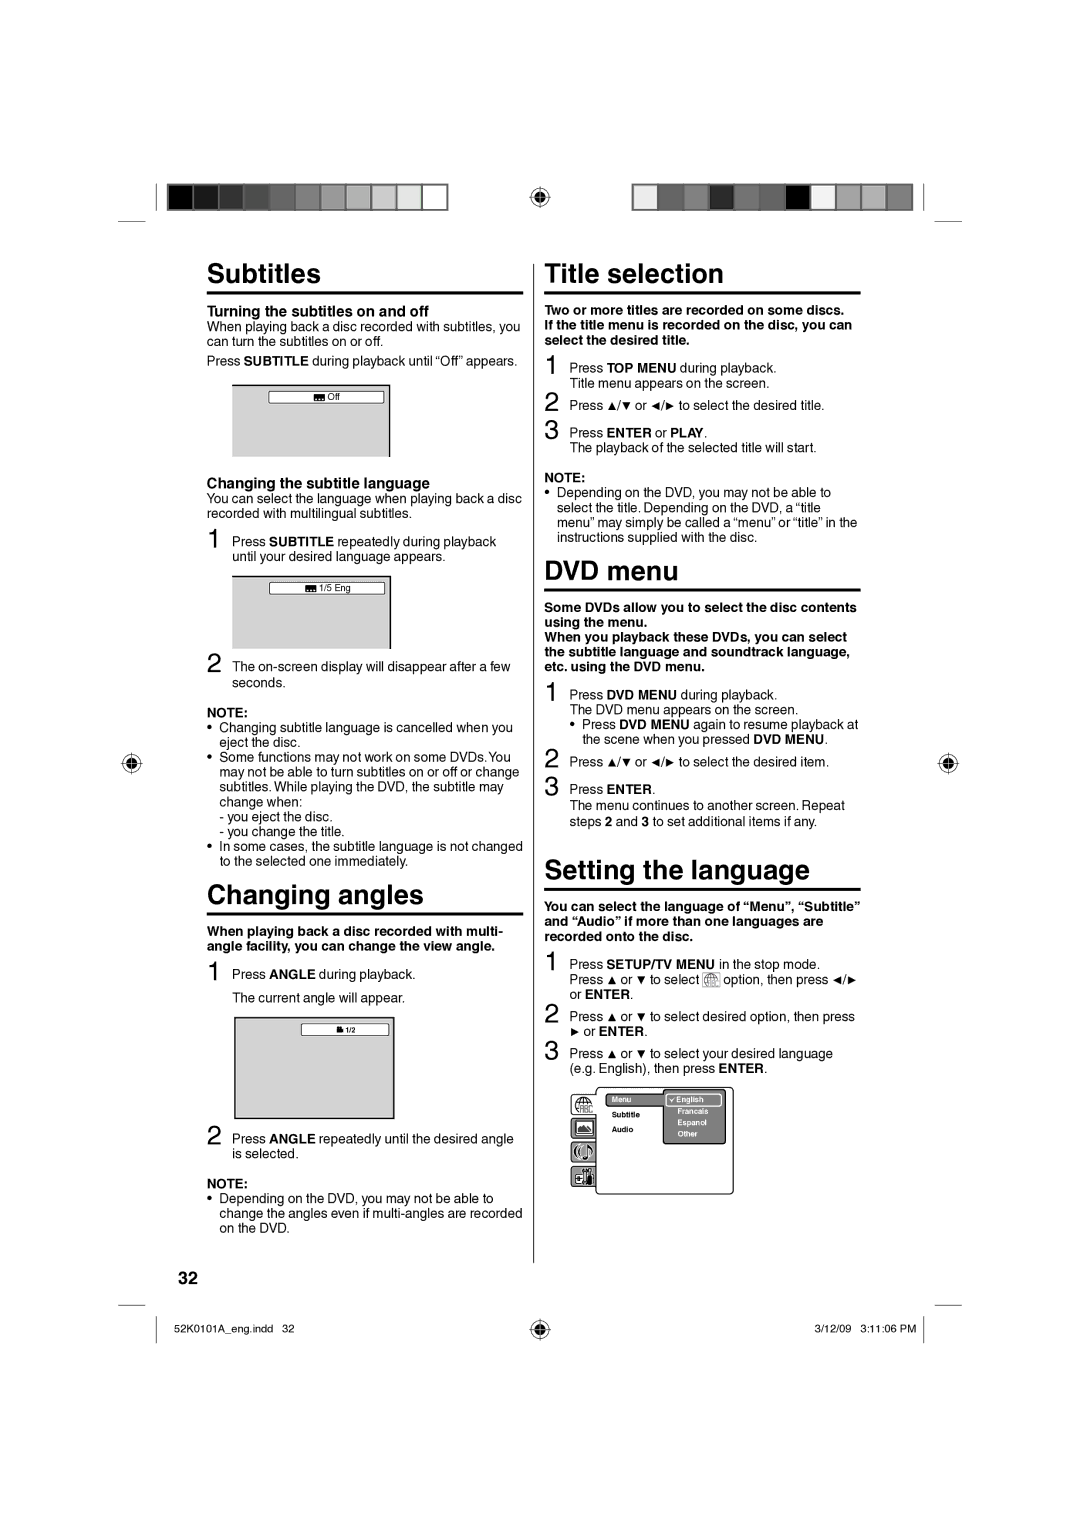 RCA L26HD35D, L32HD35D owner manual Title selection, DVD menu, Setting the language 